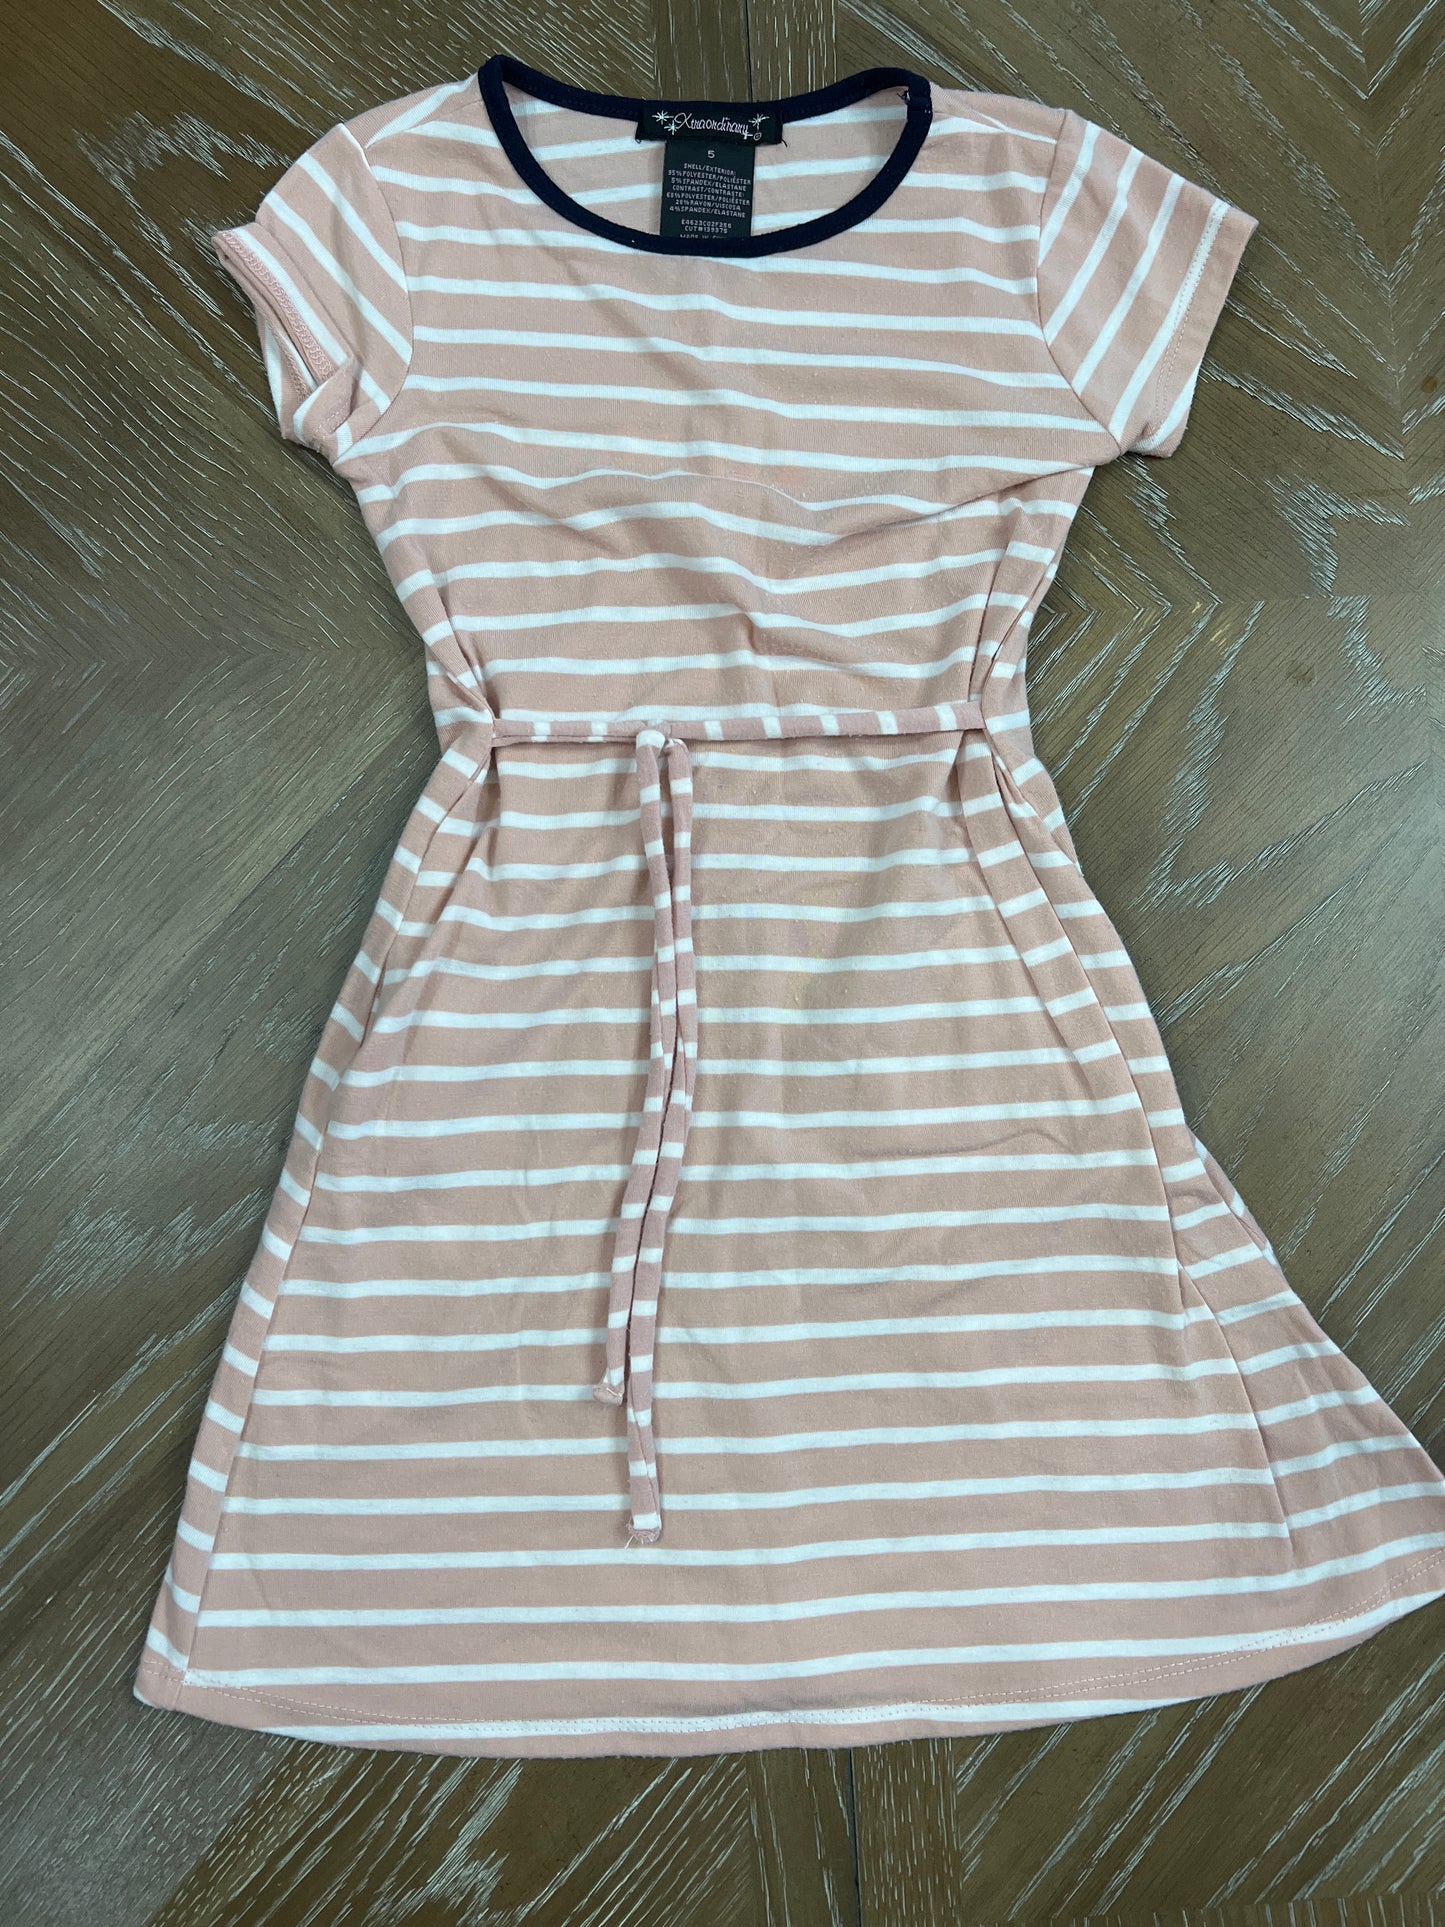 Xtraordinary size 5 pink striped dress with pockets